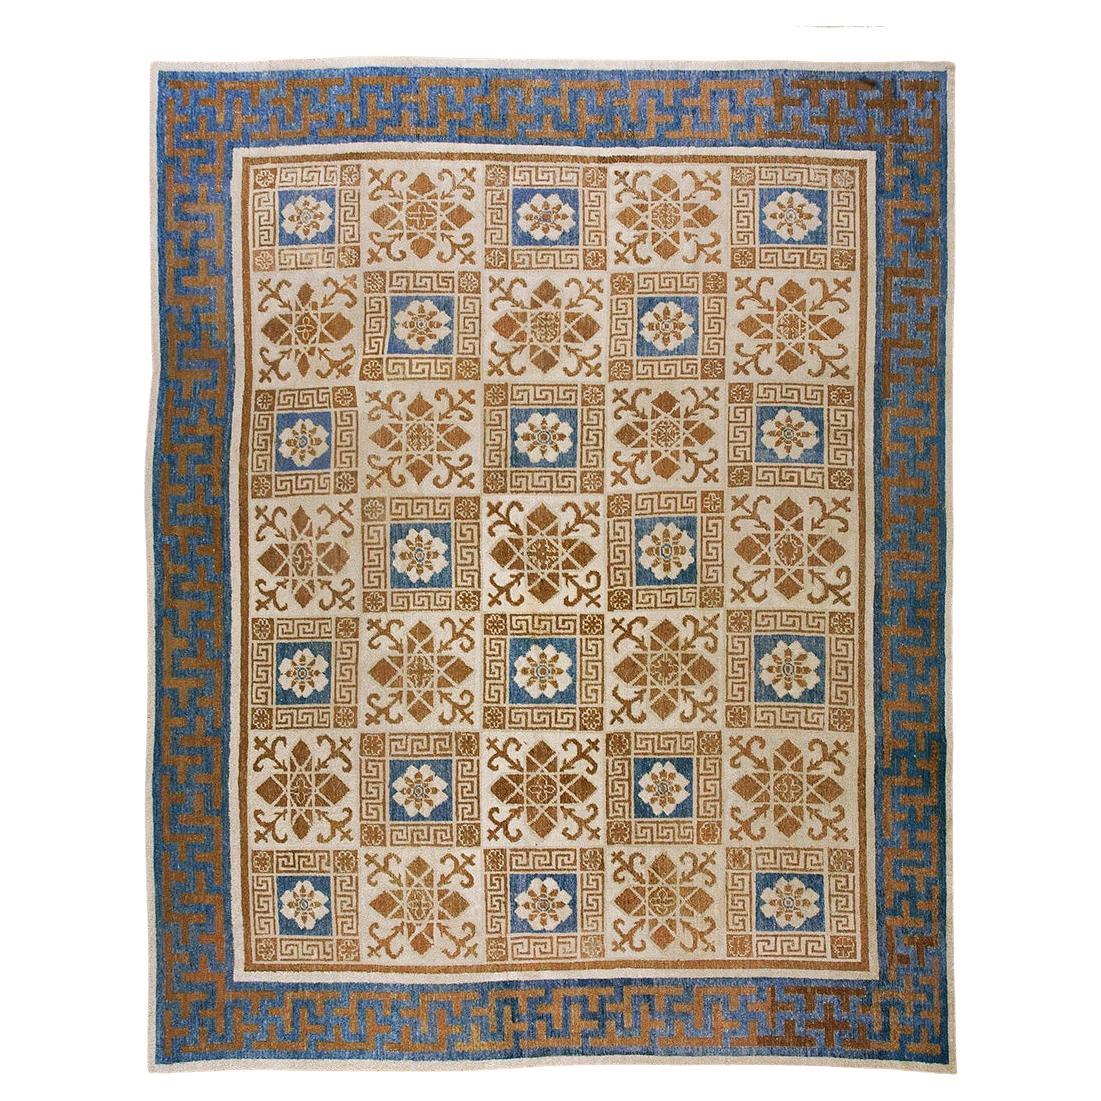 Mid-19th Century N. Chinese Mongolian Carpet ( 10'4" x 13'4" - 315 x 405 )